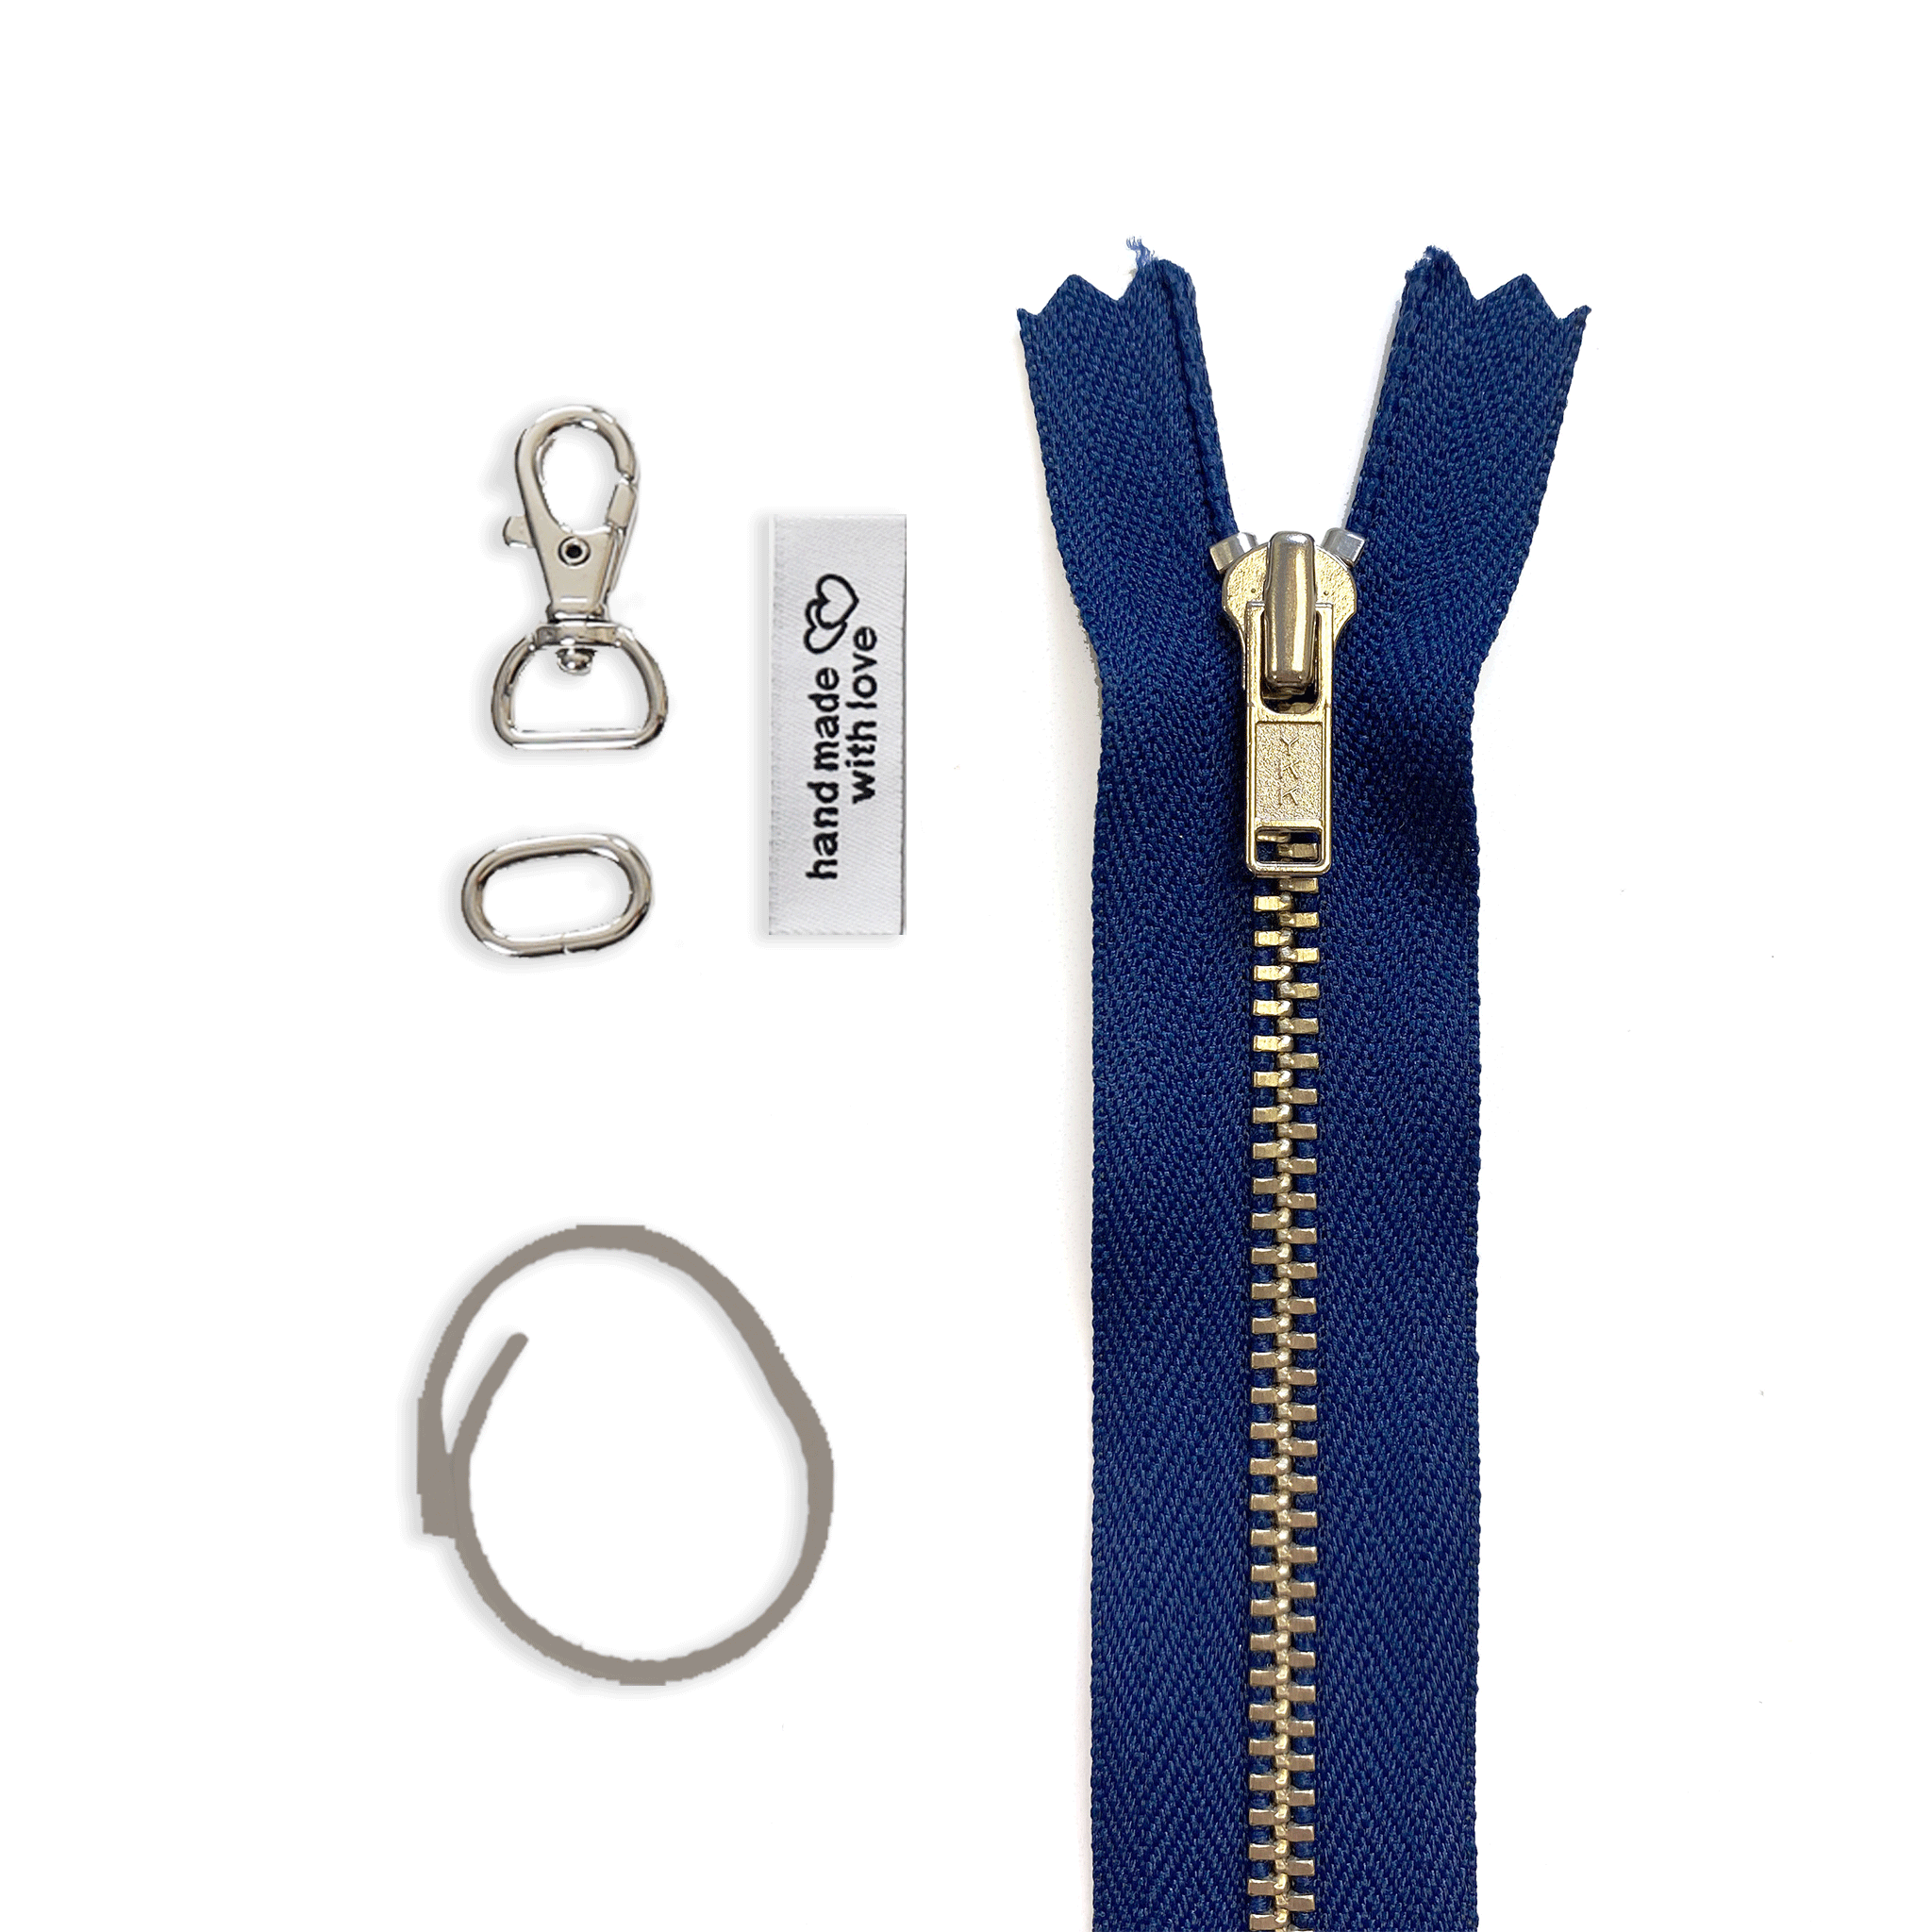 Metal Zipper & Hardware for the Wristlet